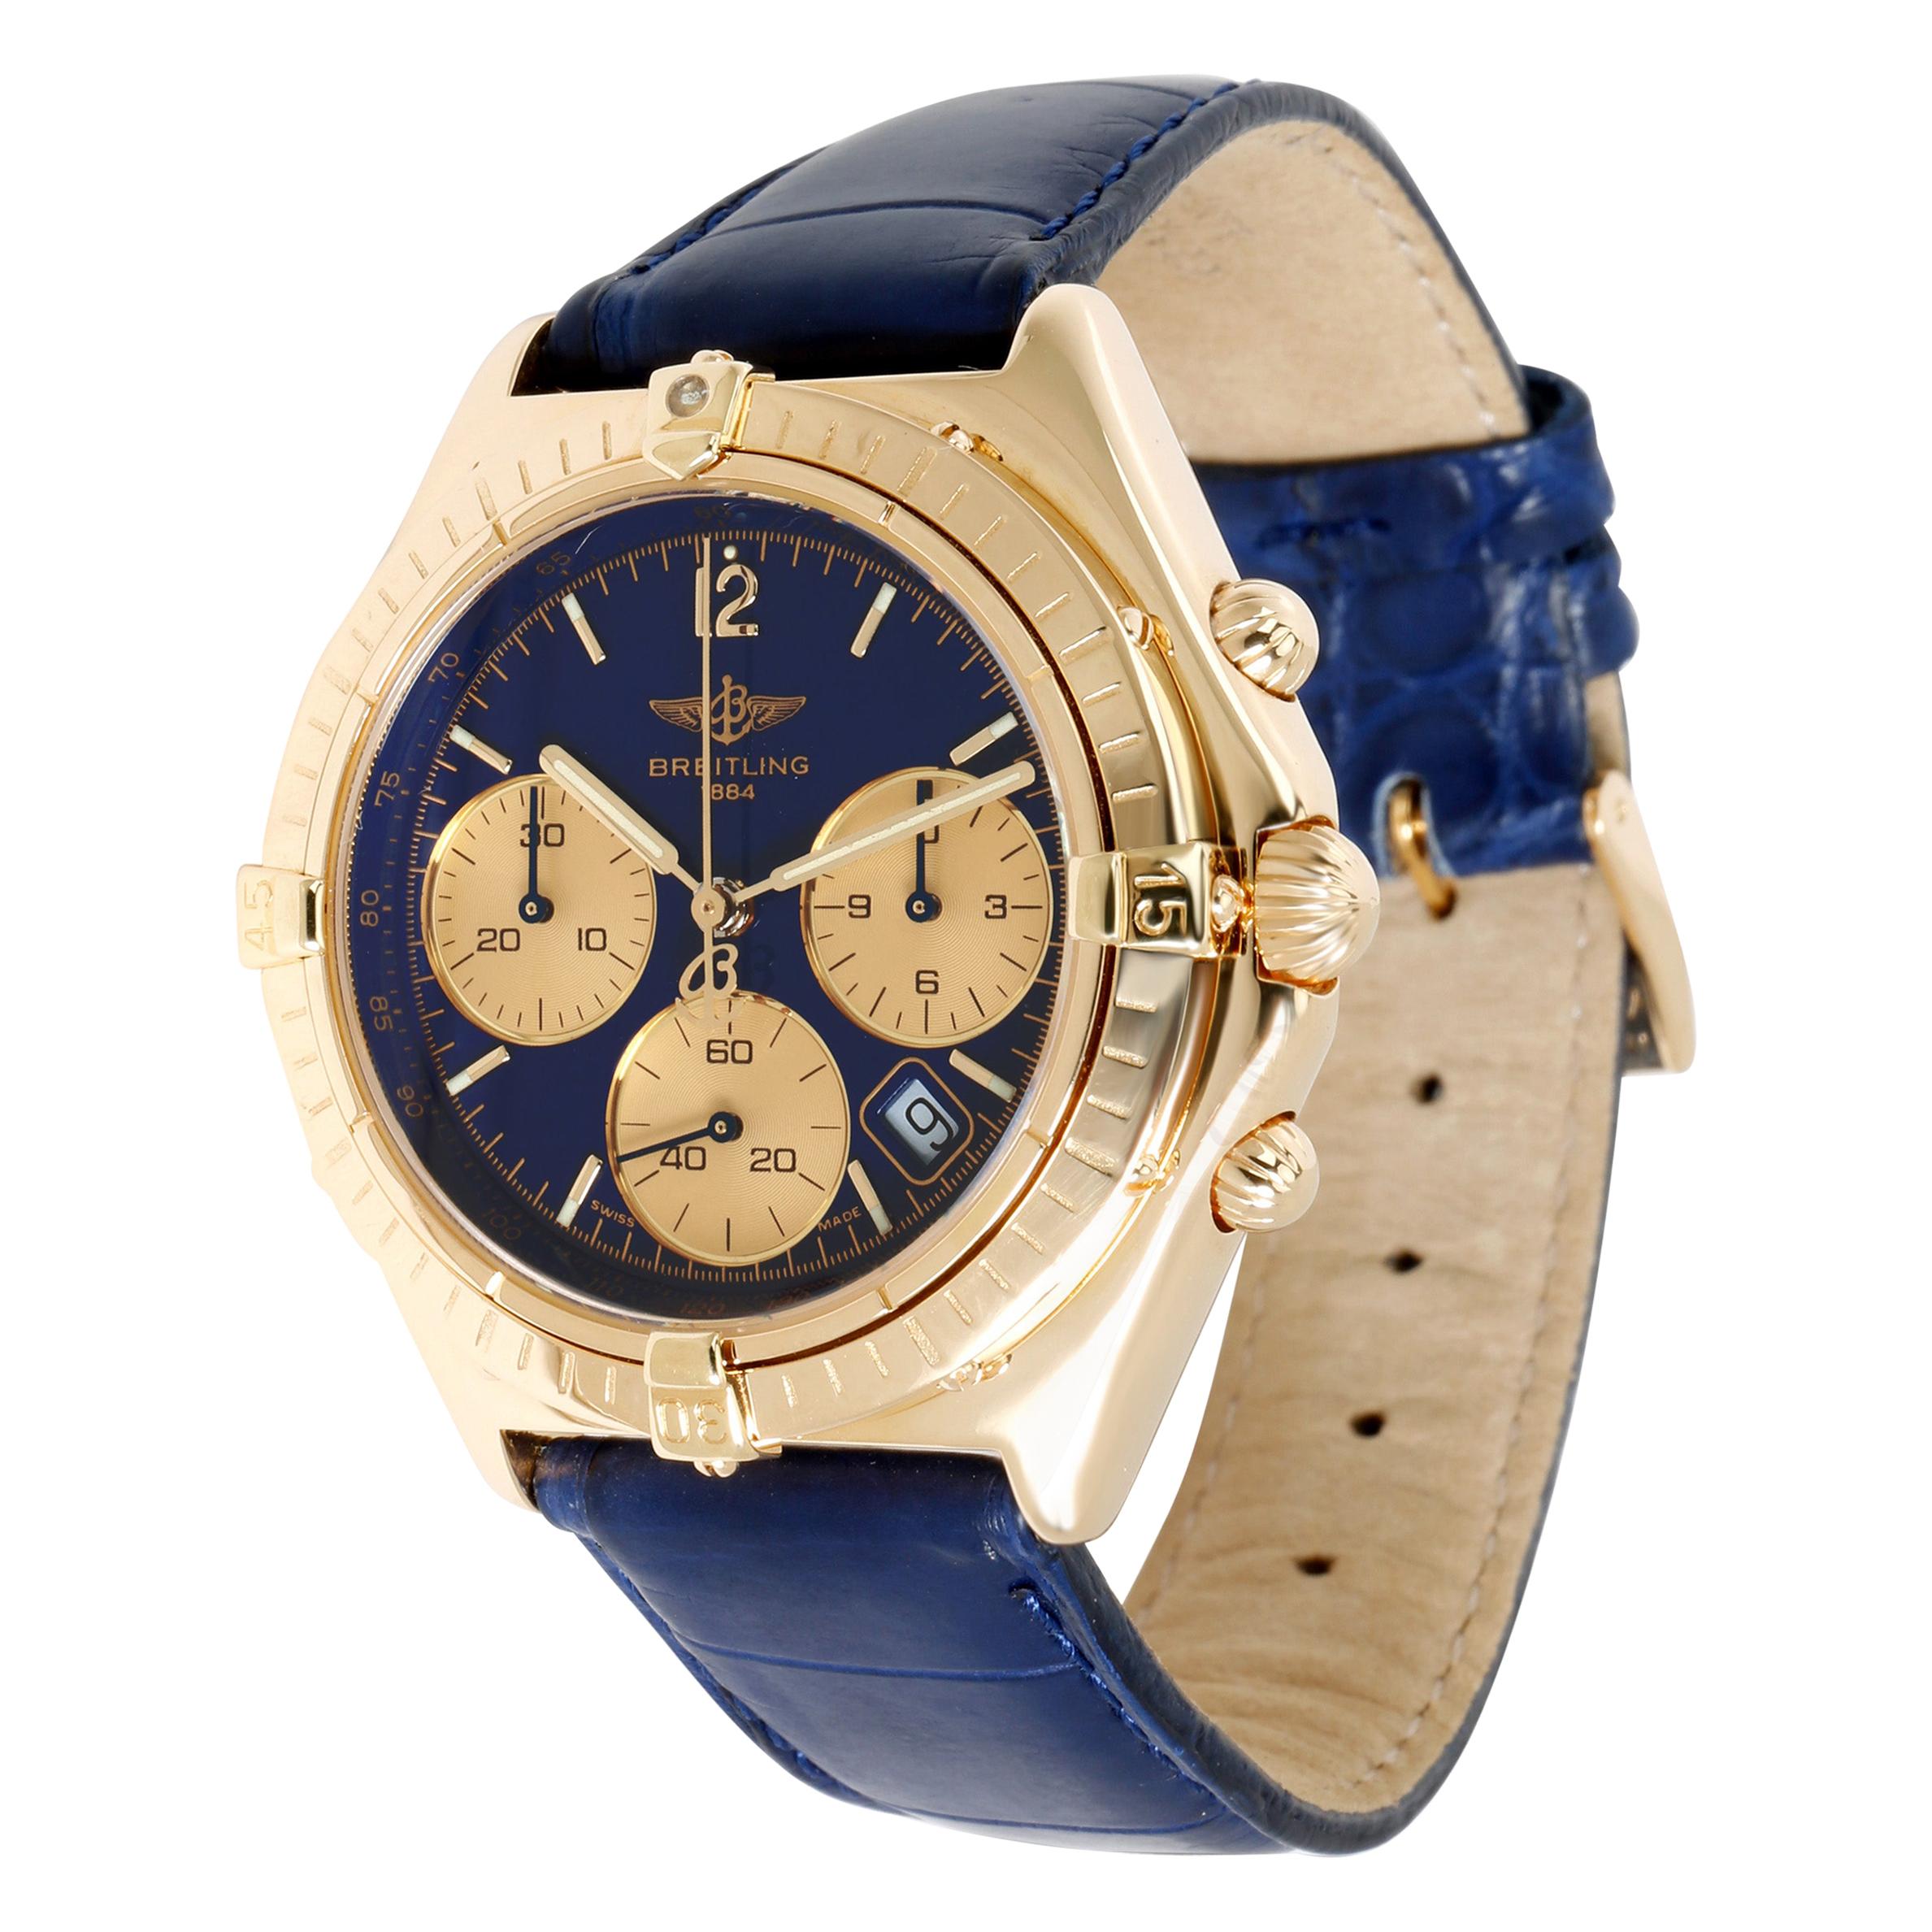 Breitling Sextant K55046 Unisex Watch in 18 Karat Yellow Gold